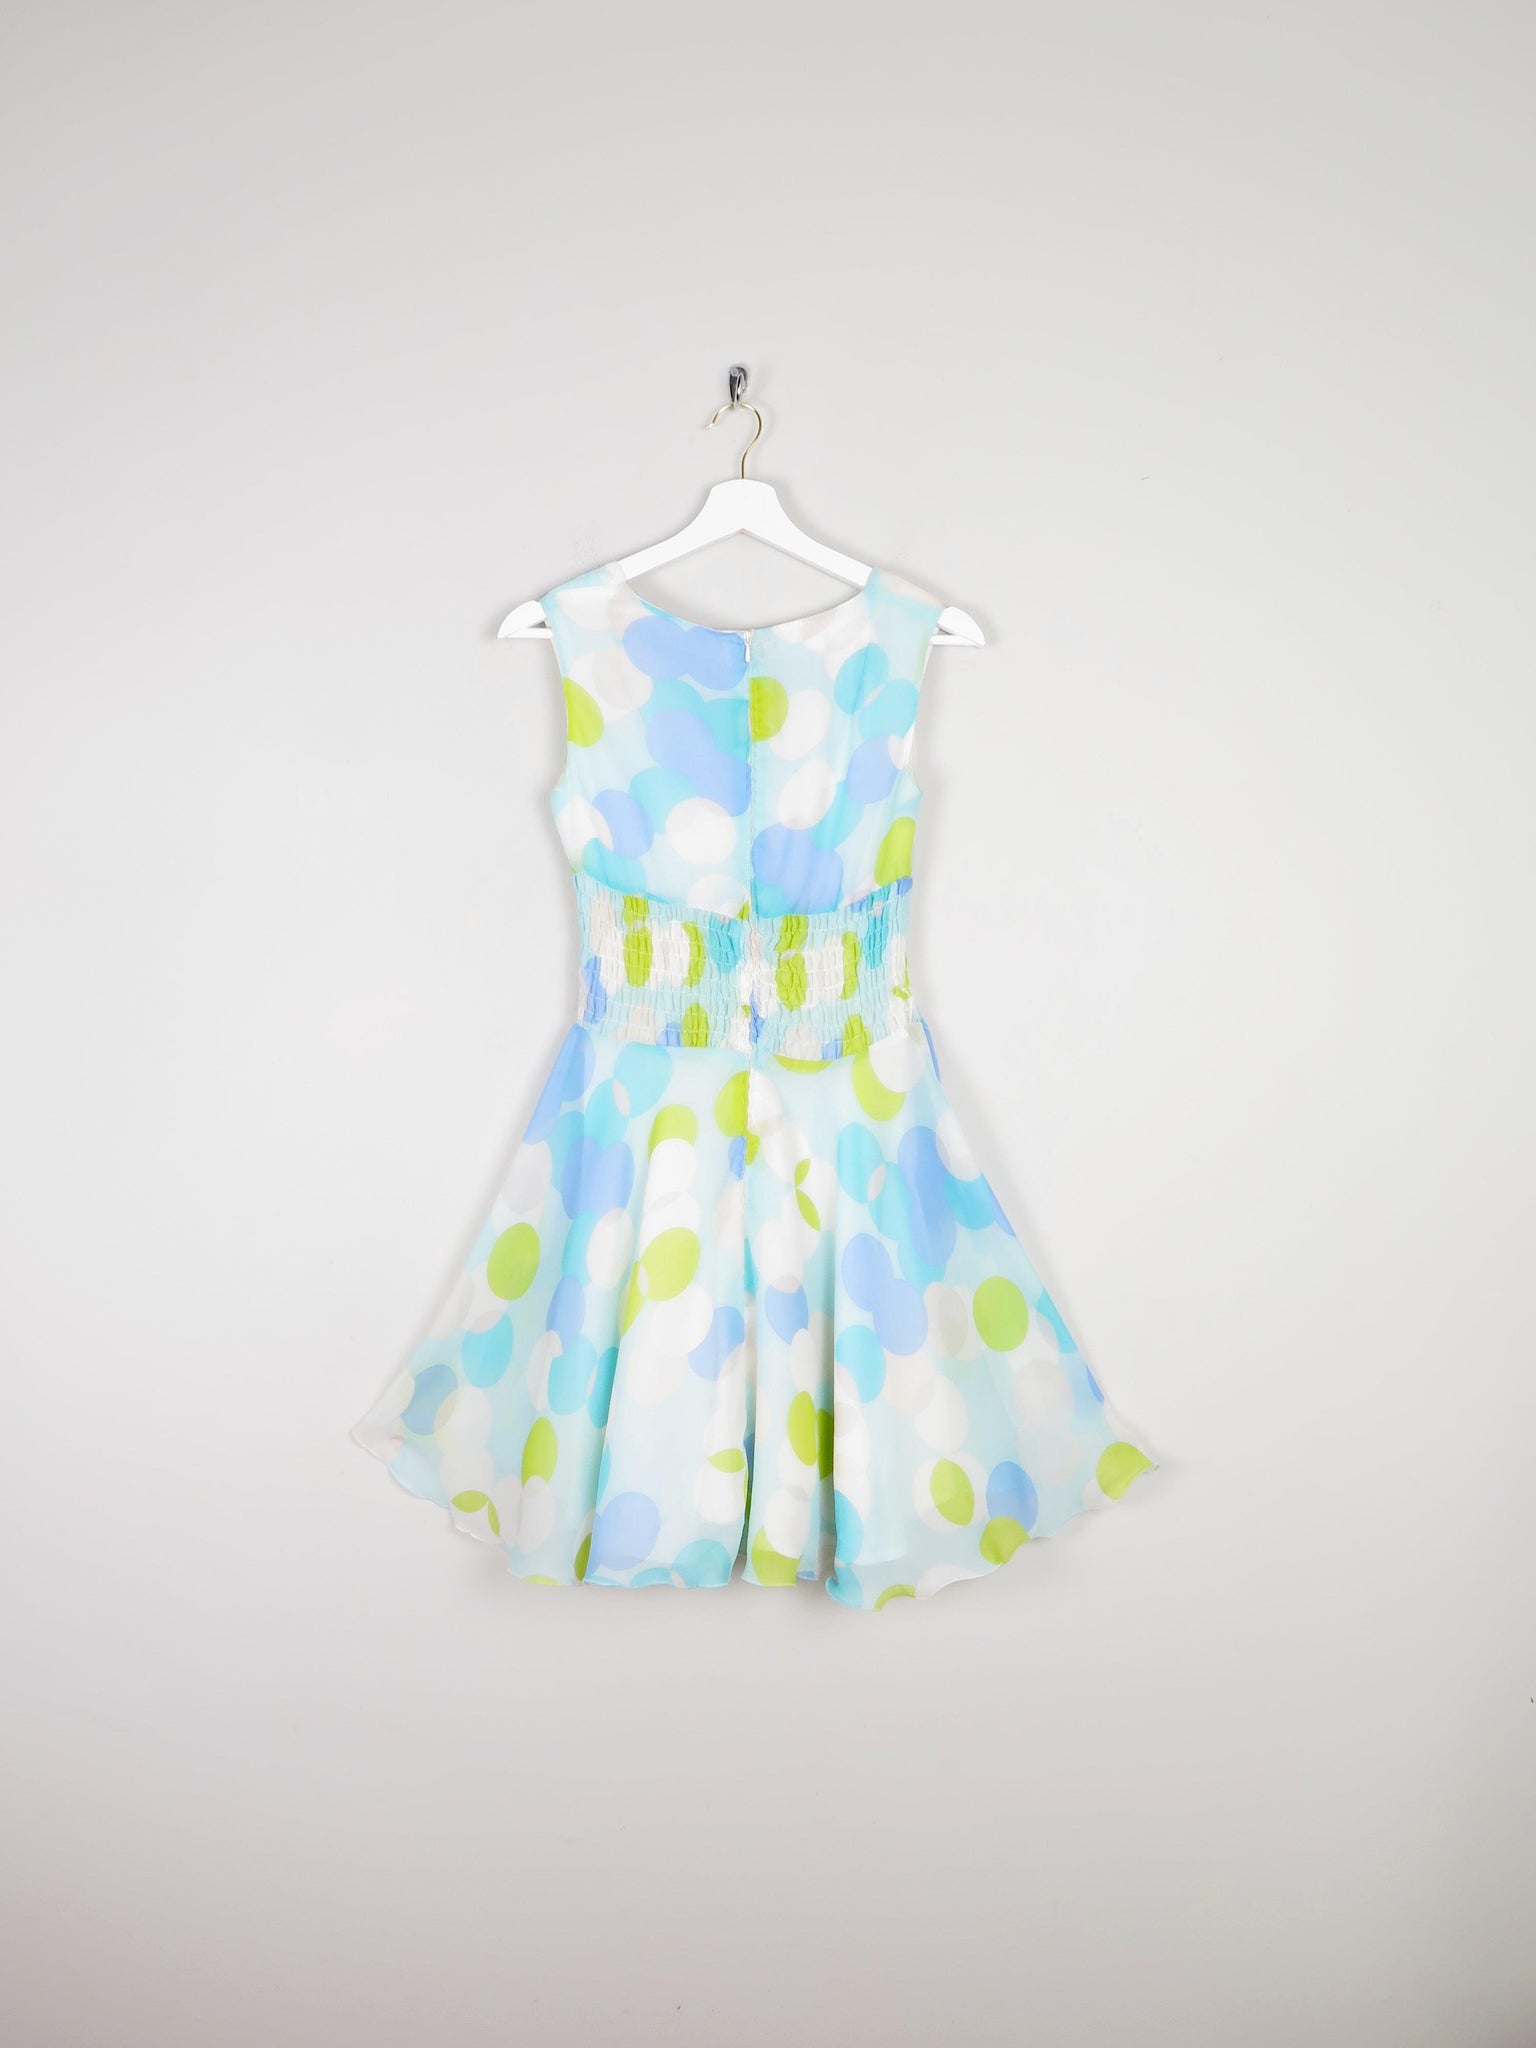 Colourful Polka Dot 1960s Short Dress 6/8 - The Harlequin